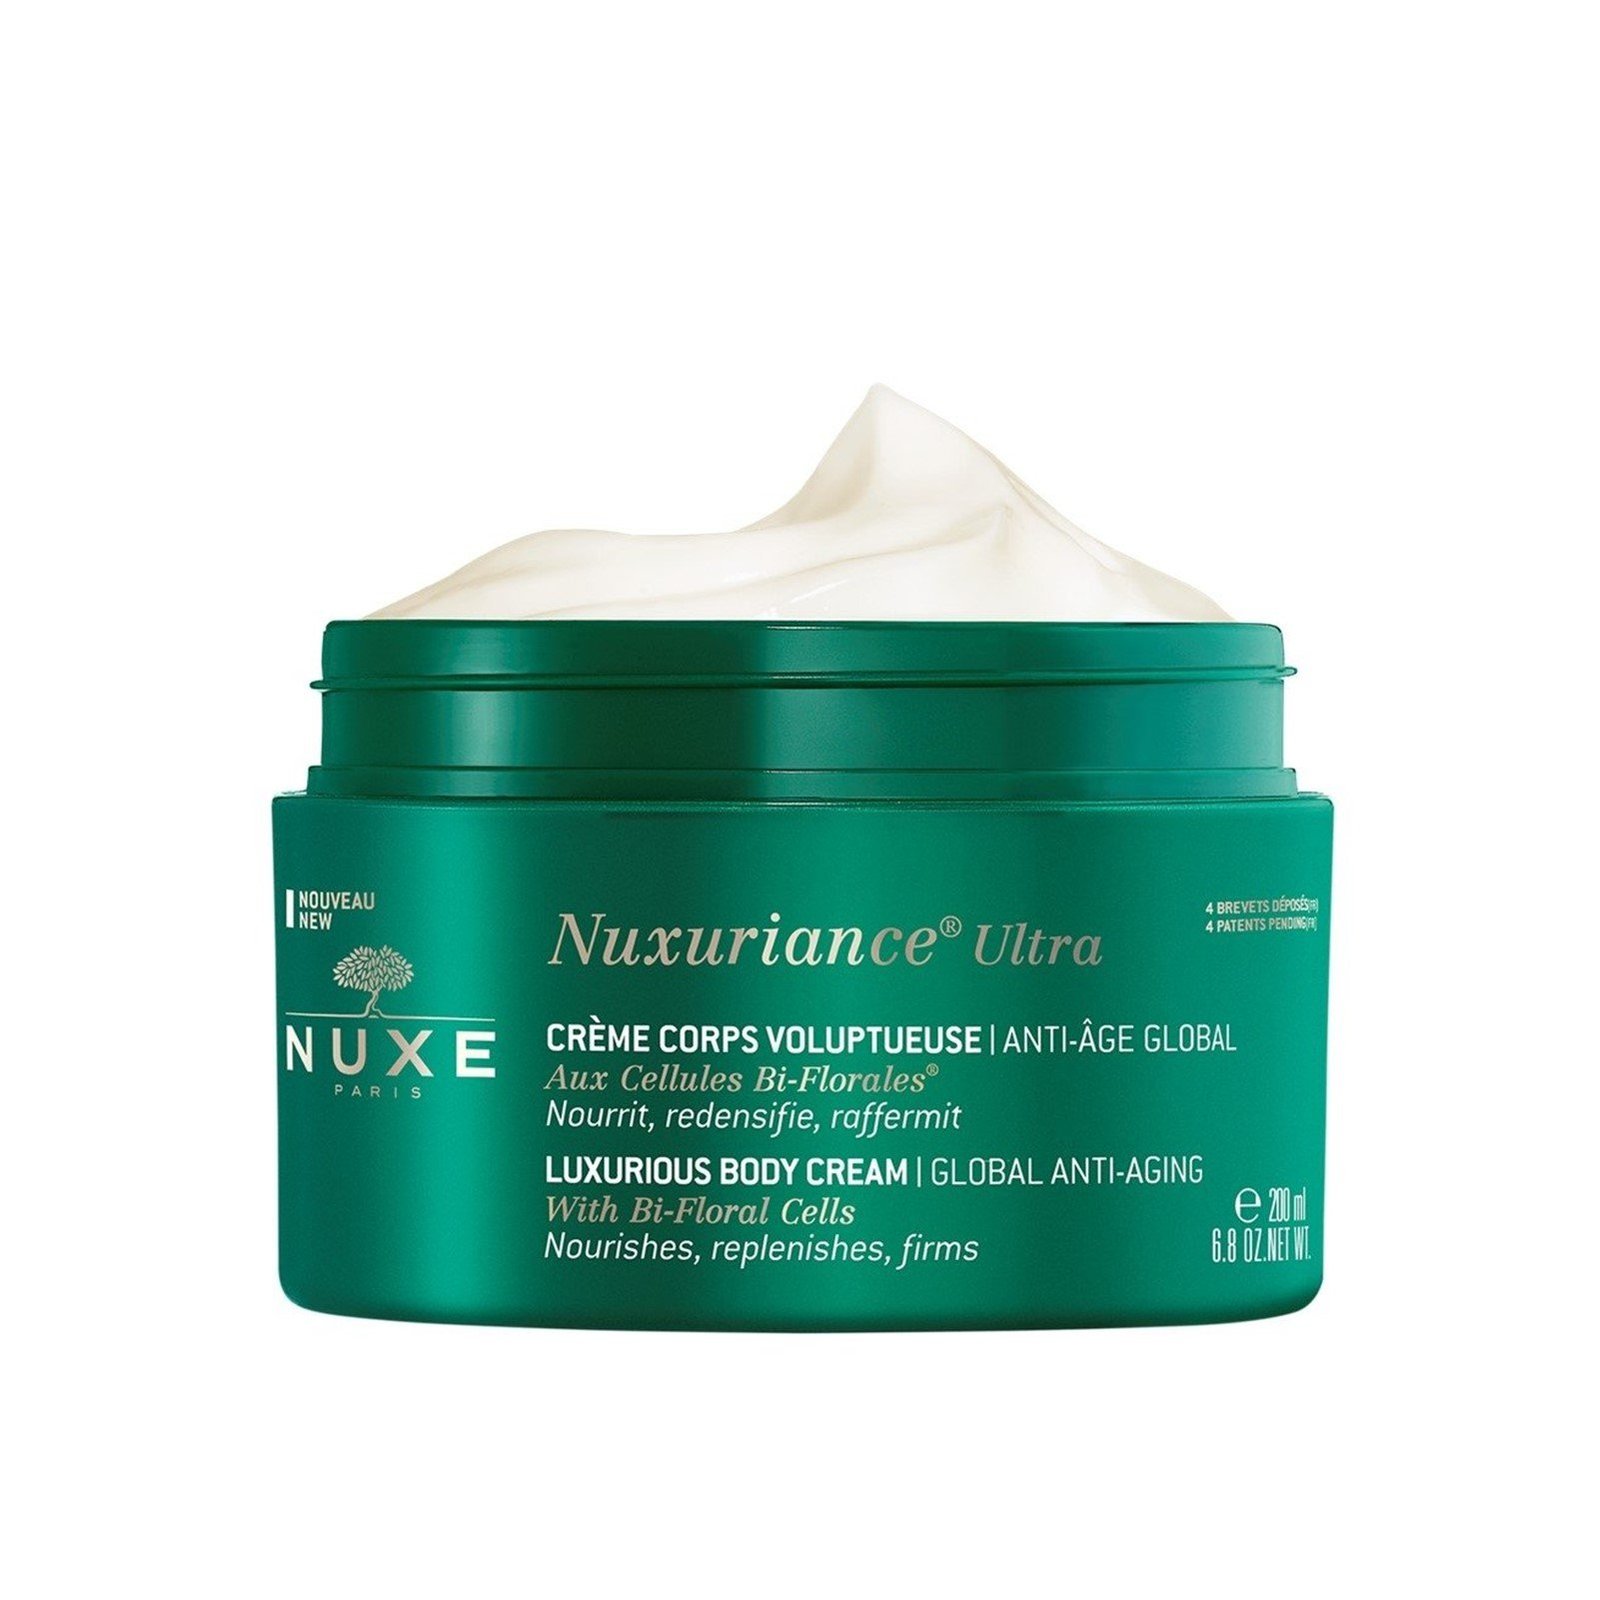 NUXE Nuxuriance Ultra Luxurious Body Cream Global Anti-Aging 200ml (6.76fl oz)